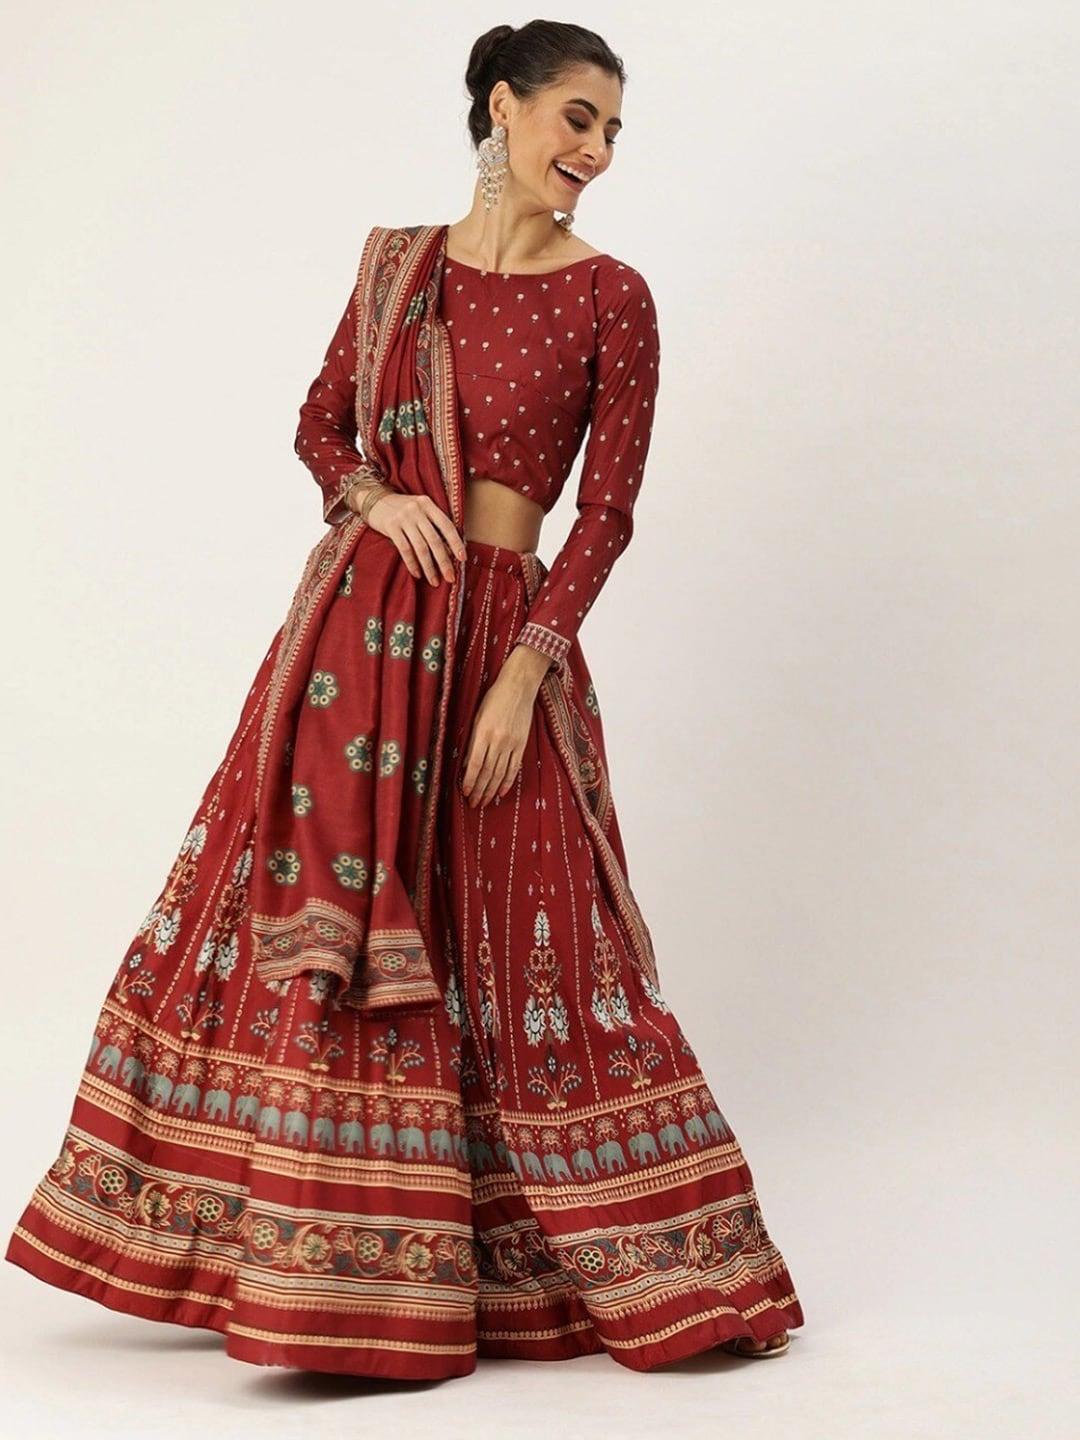 udbhav textile printed semi-stitched lehenga & unstitched blouse with dupatta